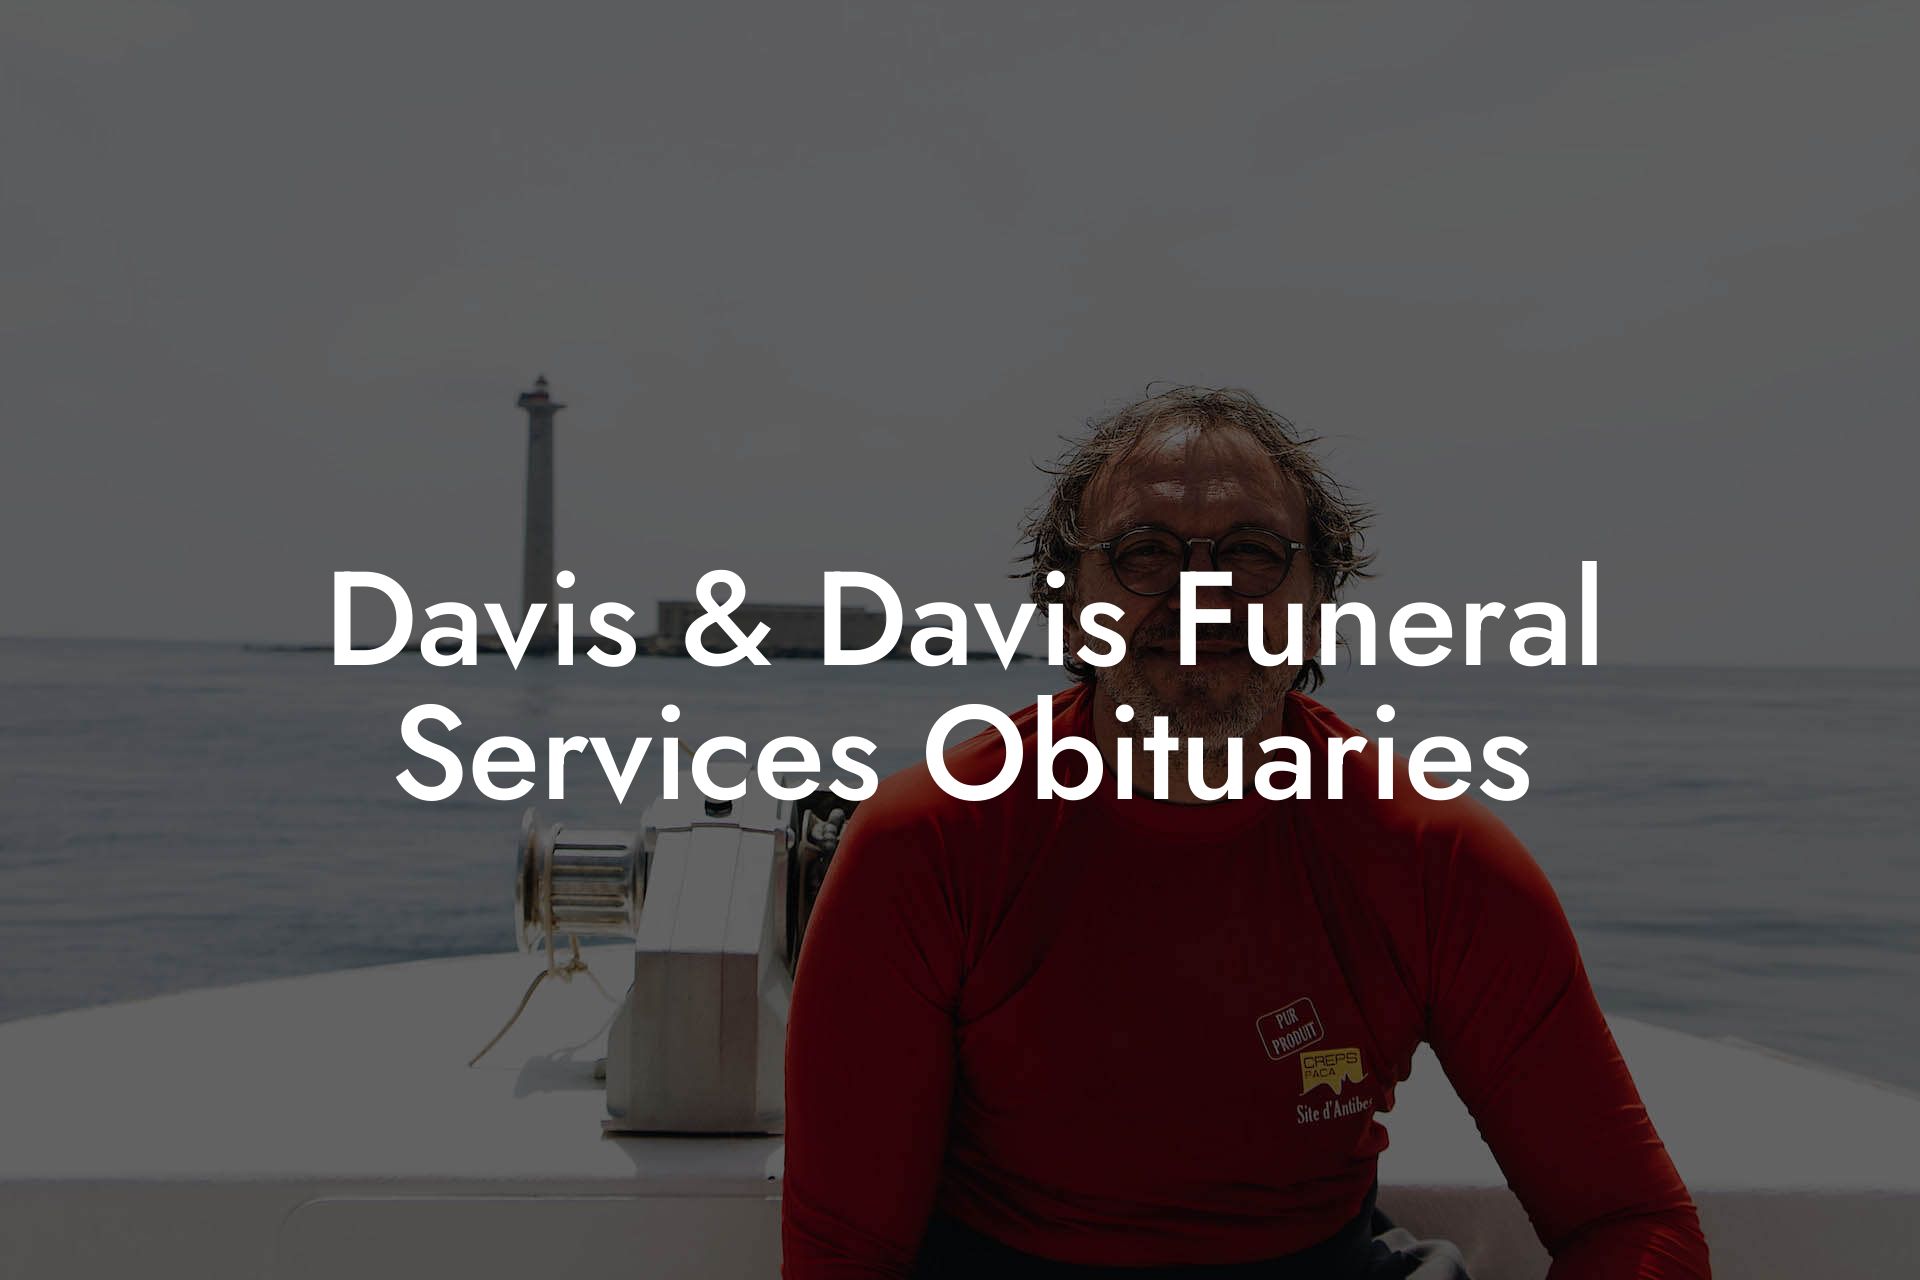 Davis & Davis Funeral Services Obituaries